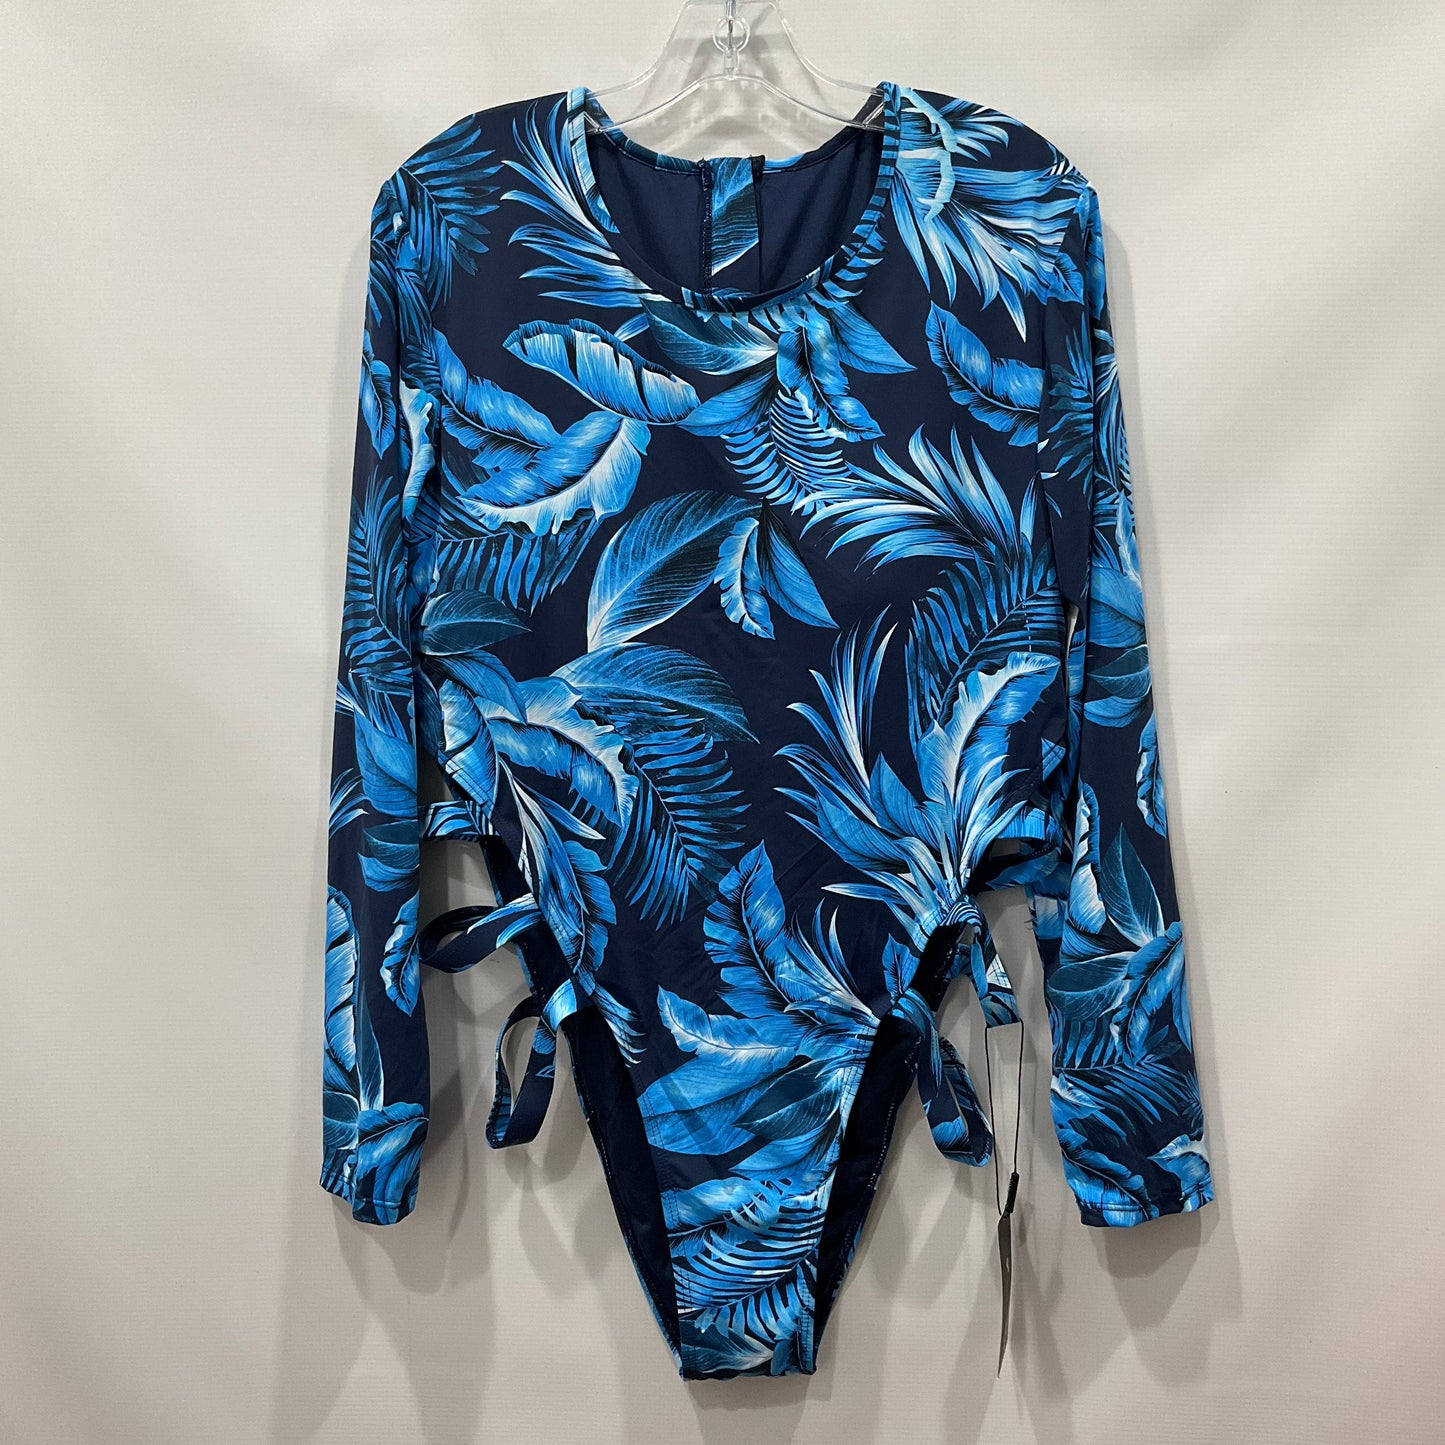 Blue Swimsuit Fashion Nova, Size 3x